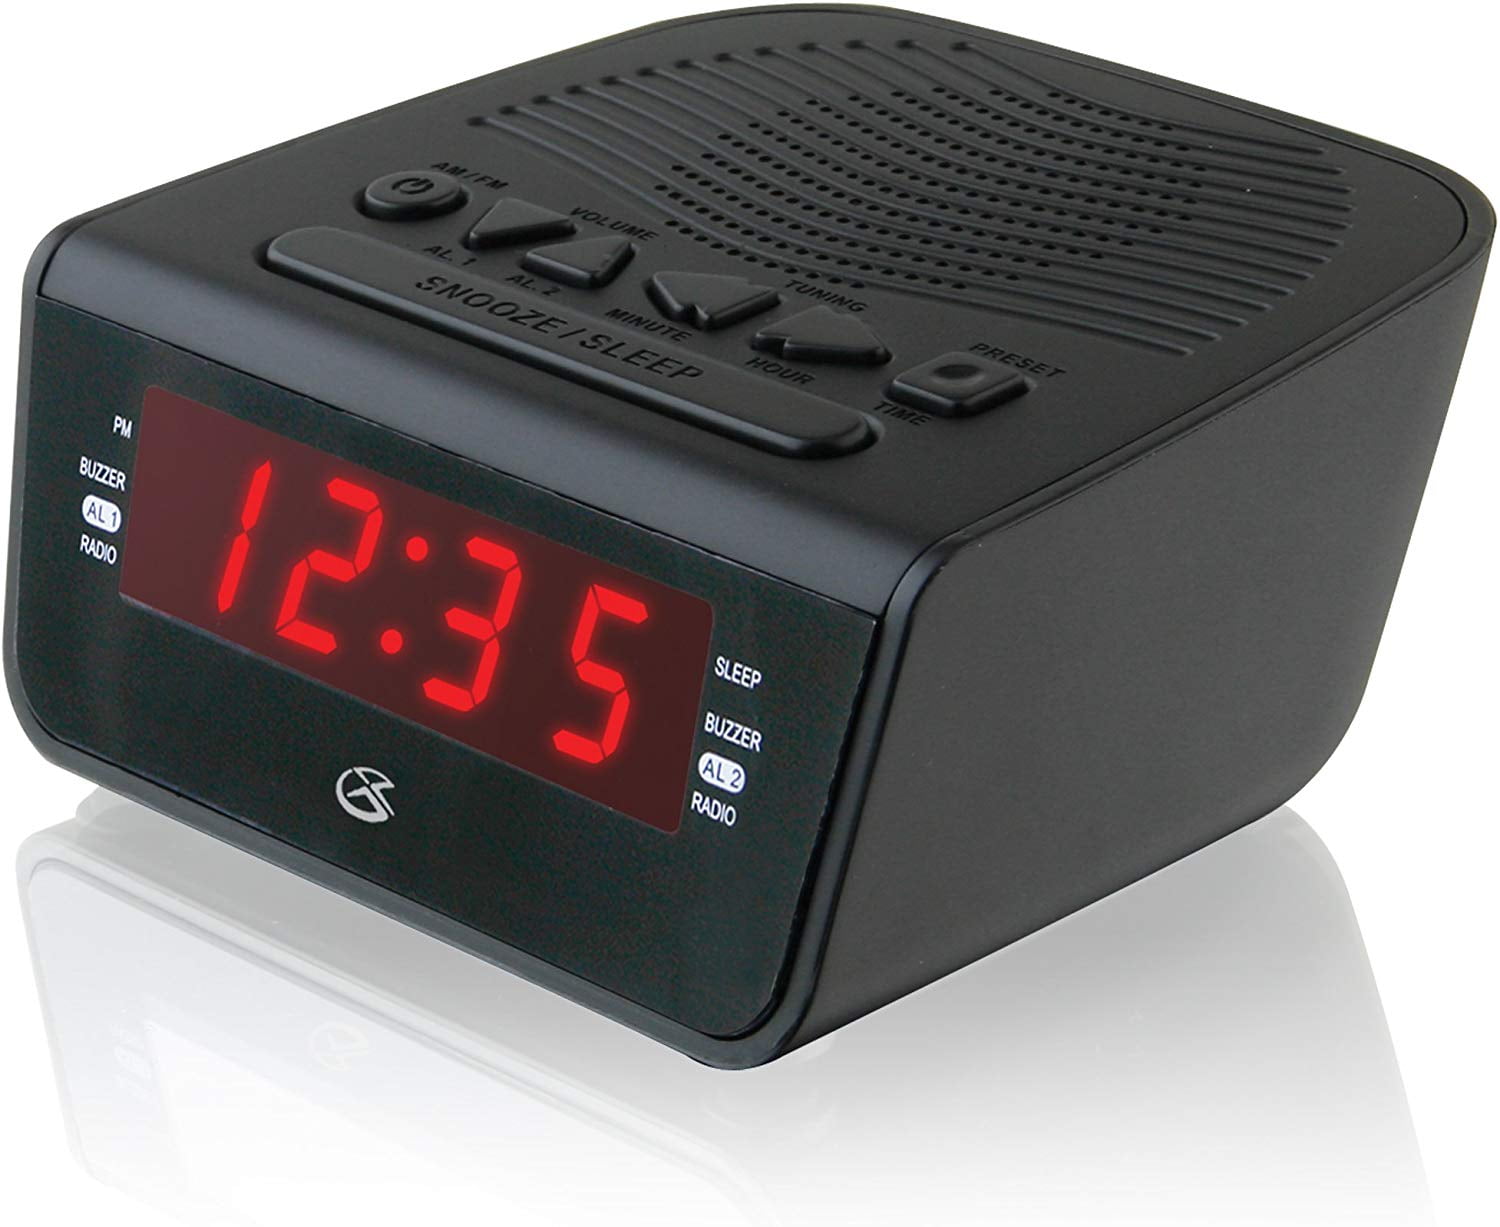 Sony AM FM Cube Alarm Clock Radio Black Brightness Auto DST Time Gradual Wake 